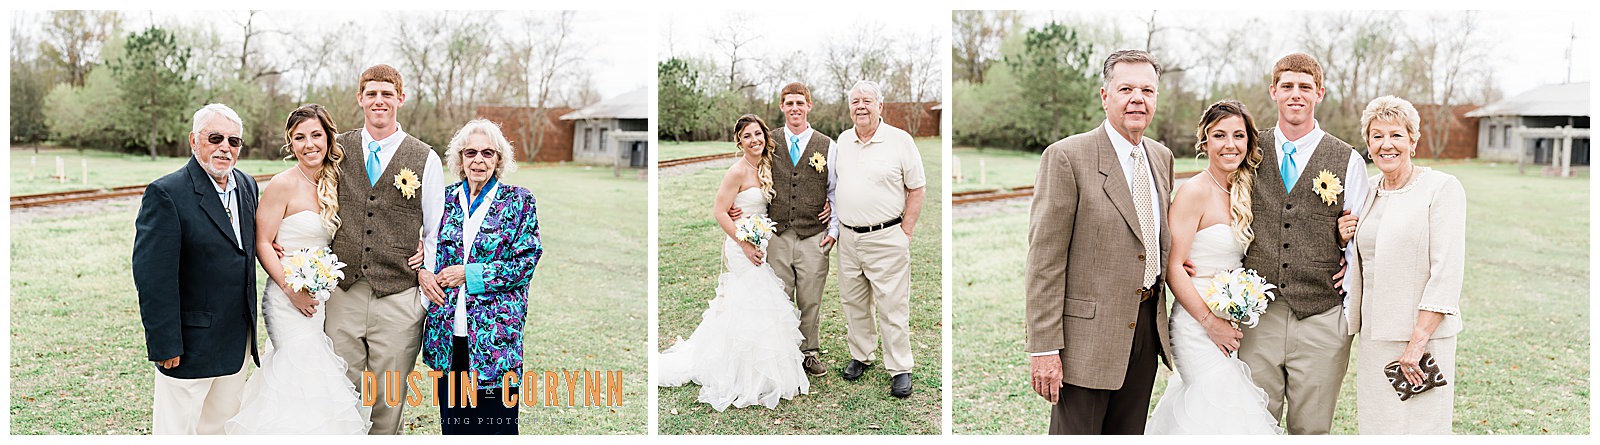 Family Portraits at South Carolina Wedding